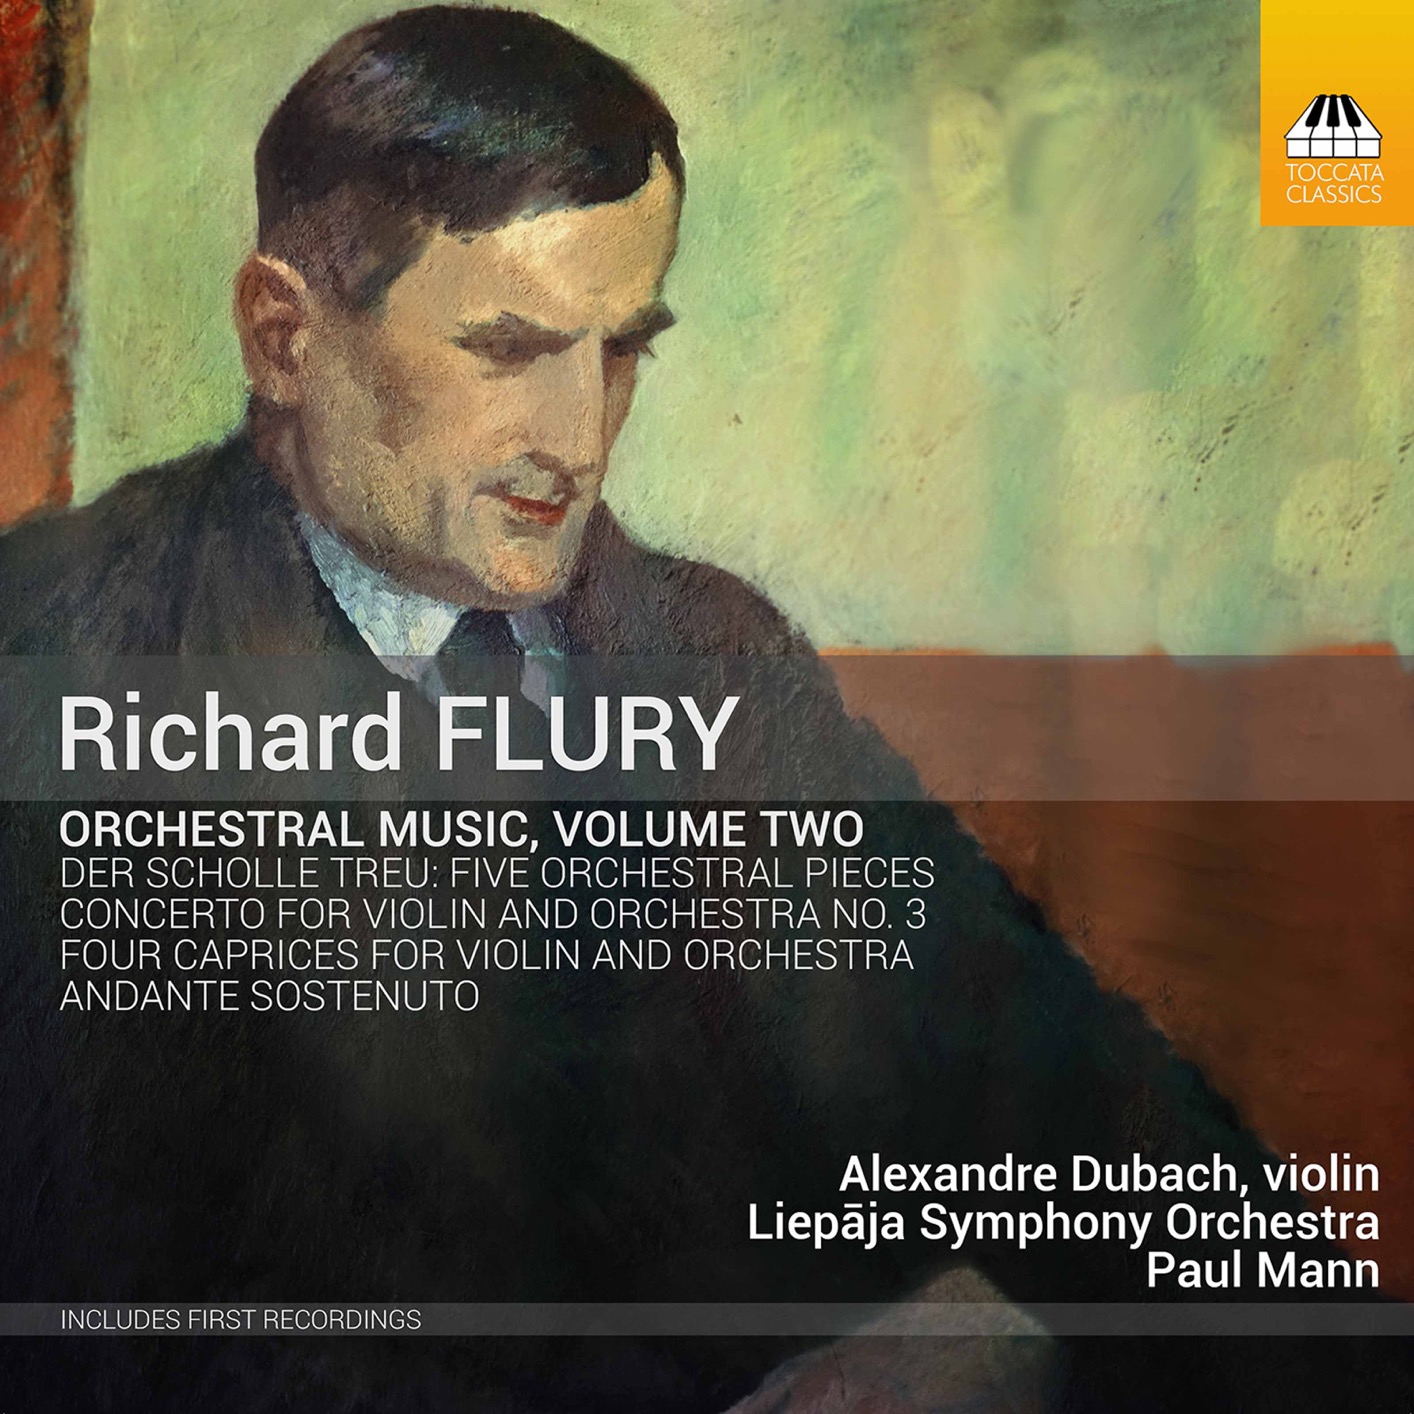 Alexandre Dubach, Liepāja Symphony Orchestra & Paul Mann – Richard Flury: Orchestral Music, Vol. 2 (2021) [FLAC 24bit/96kHz]